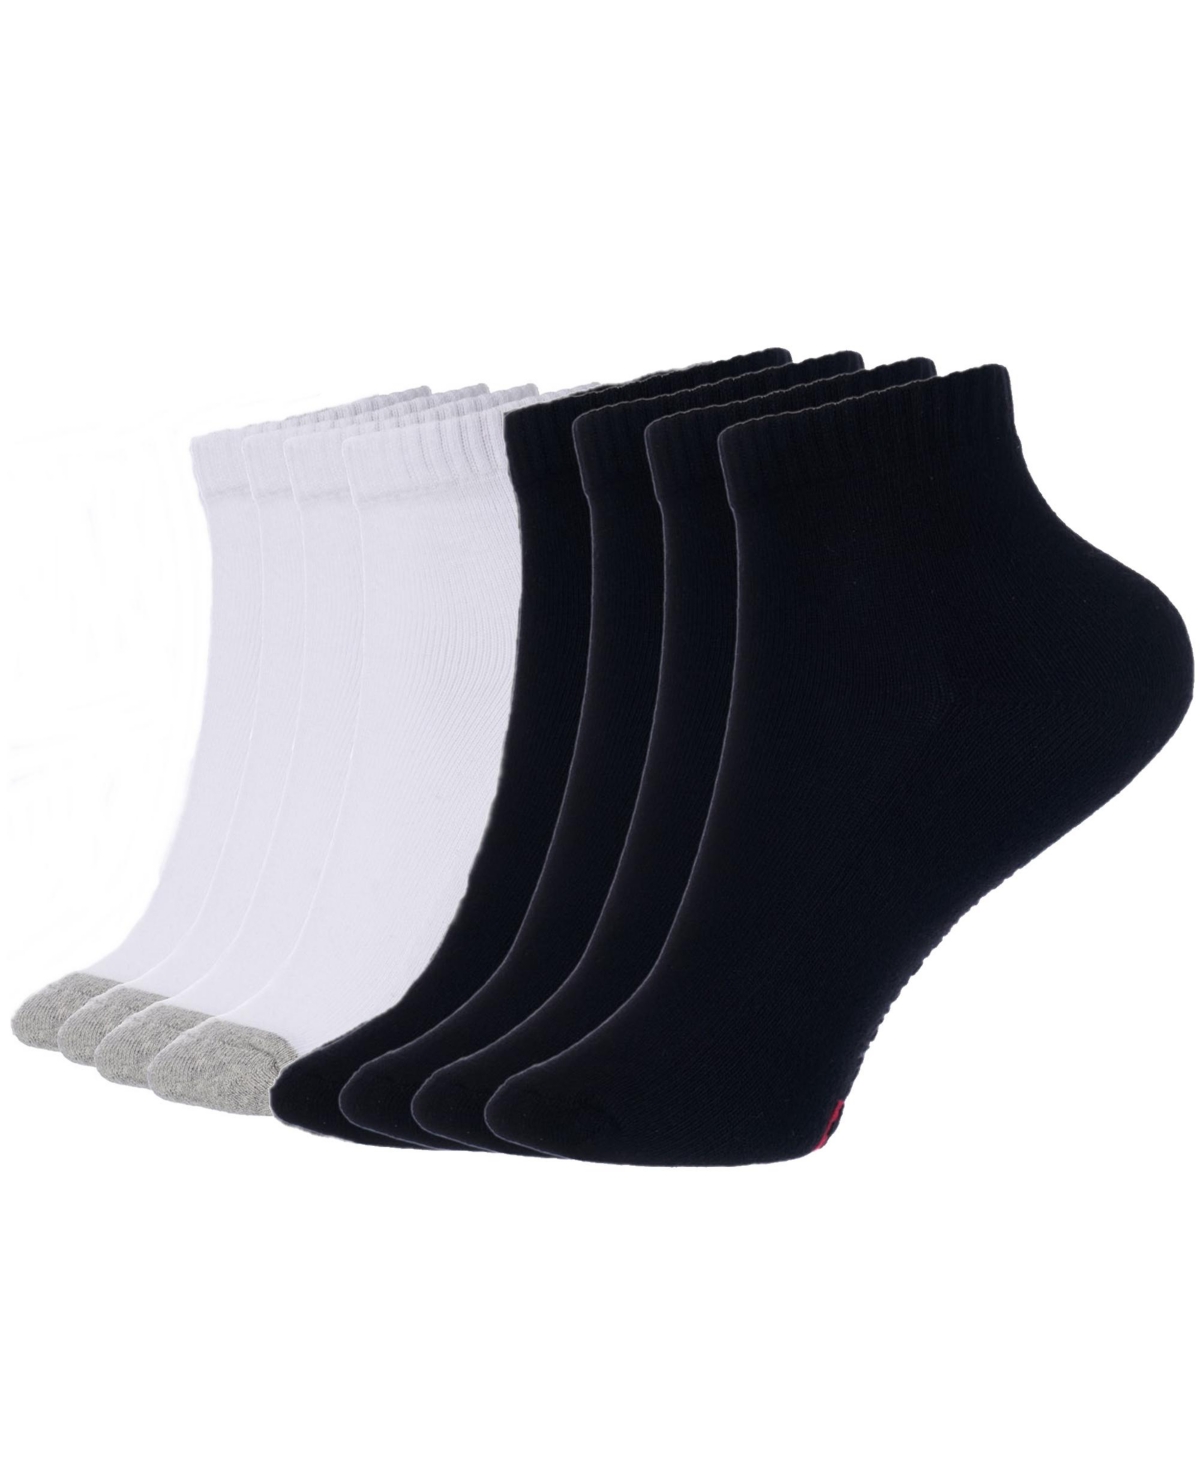 Mens 8 Pack Ankle Socks Low Cut Cotton Athletic Sock Shoe Size 6-12 - Black white